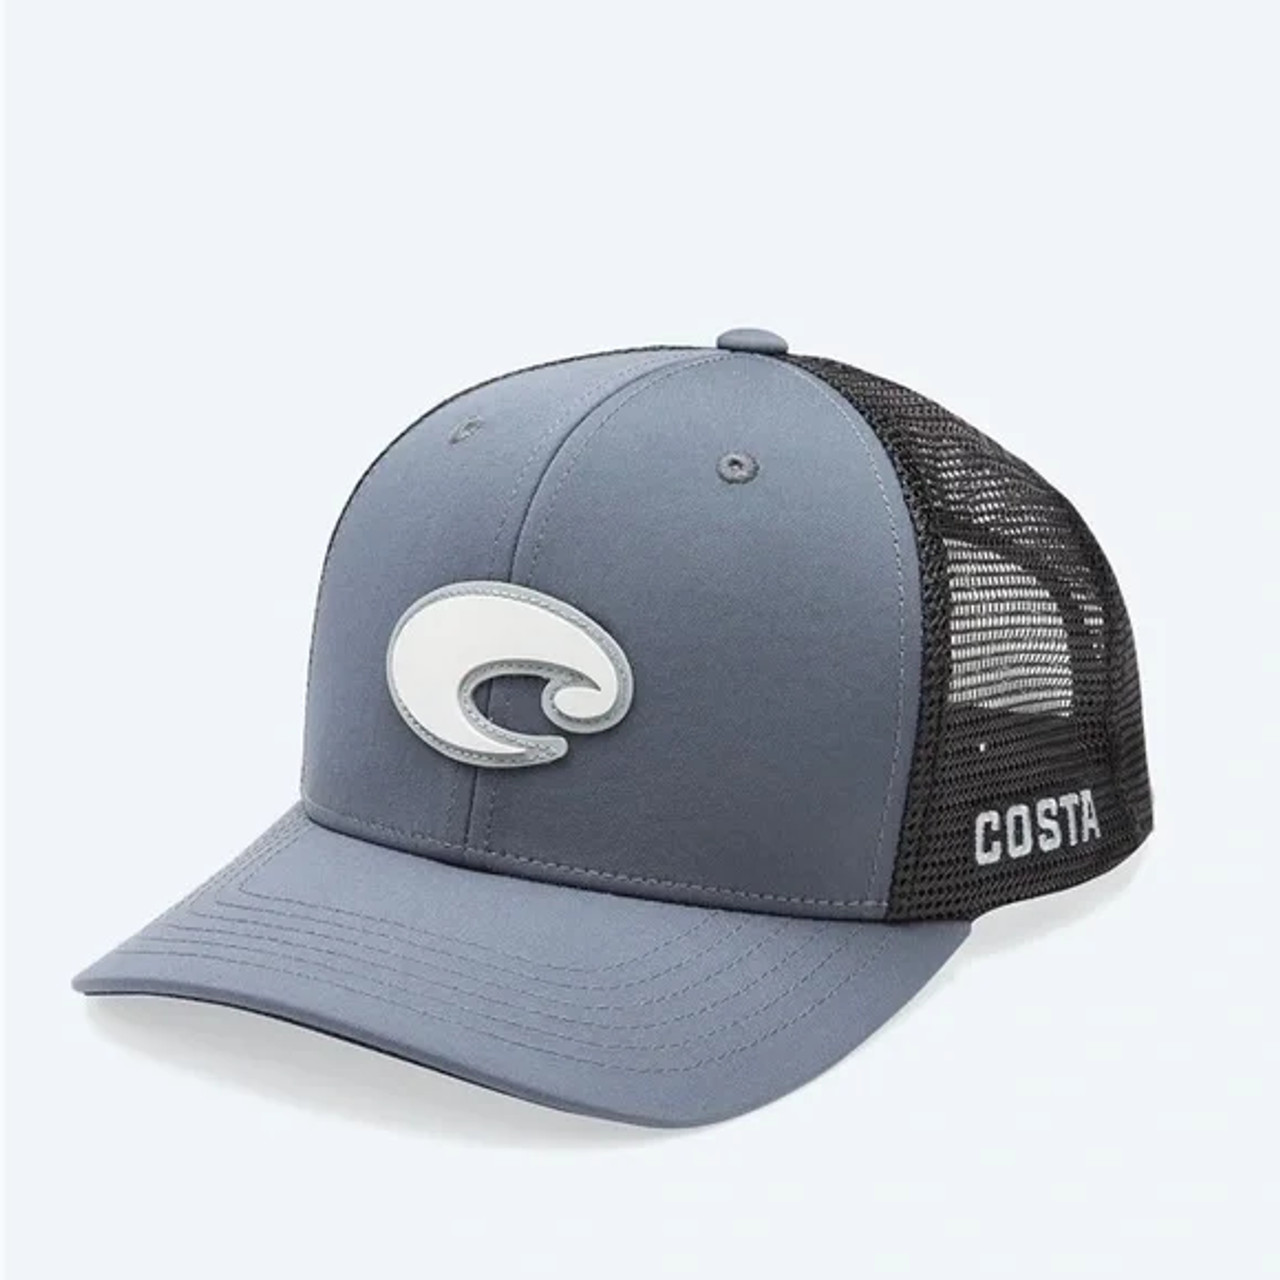 Costa Core Performance Trucker Hat - Men's One Size / Gray